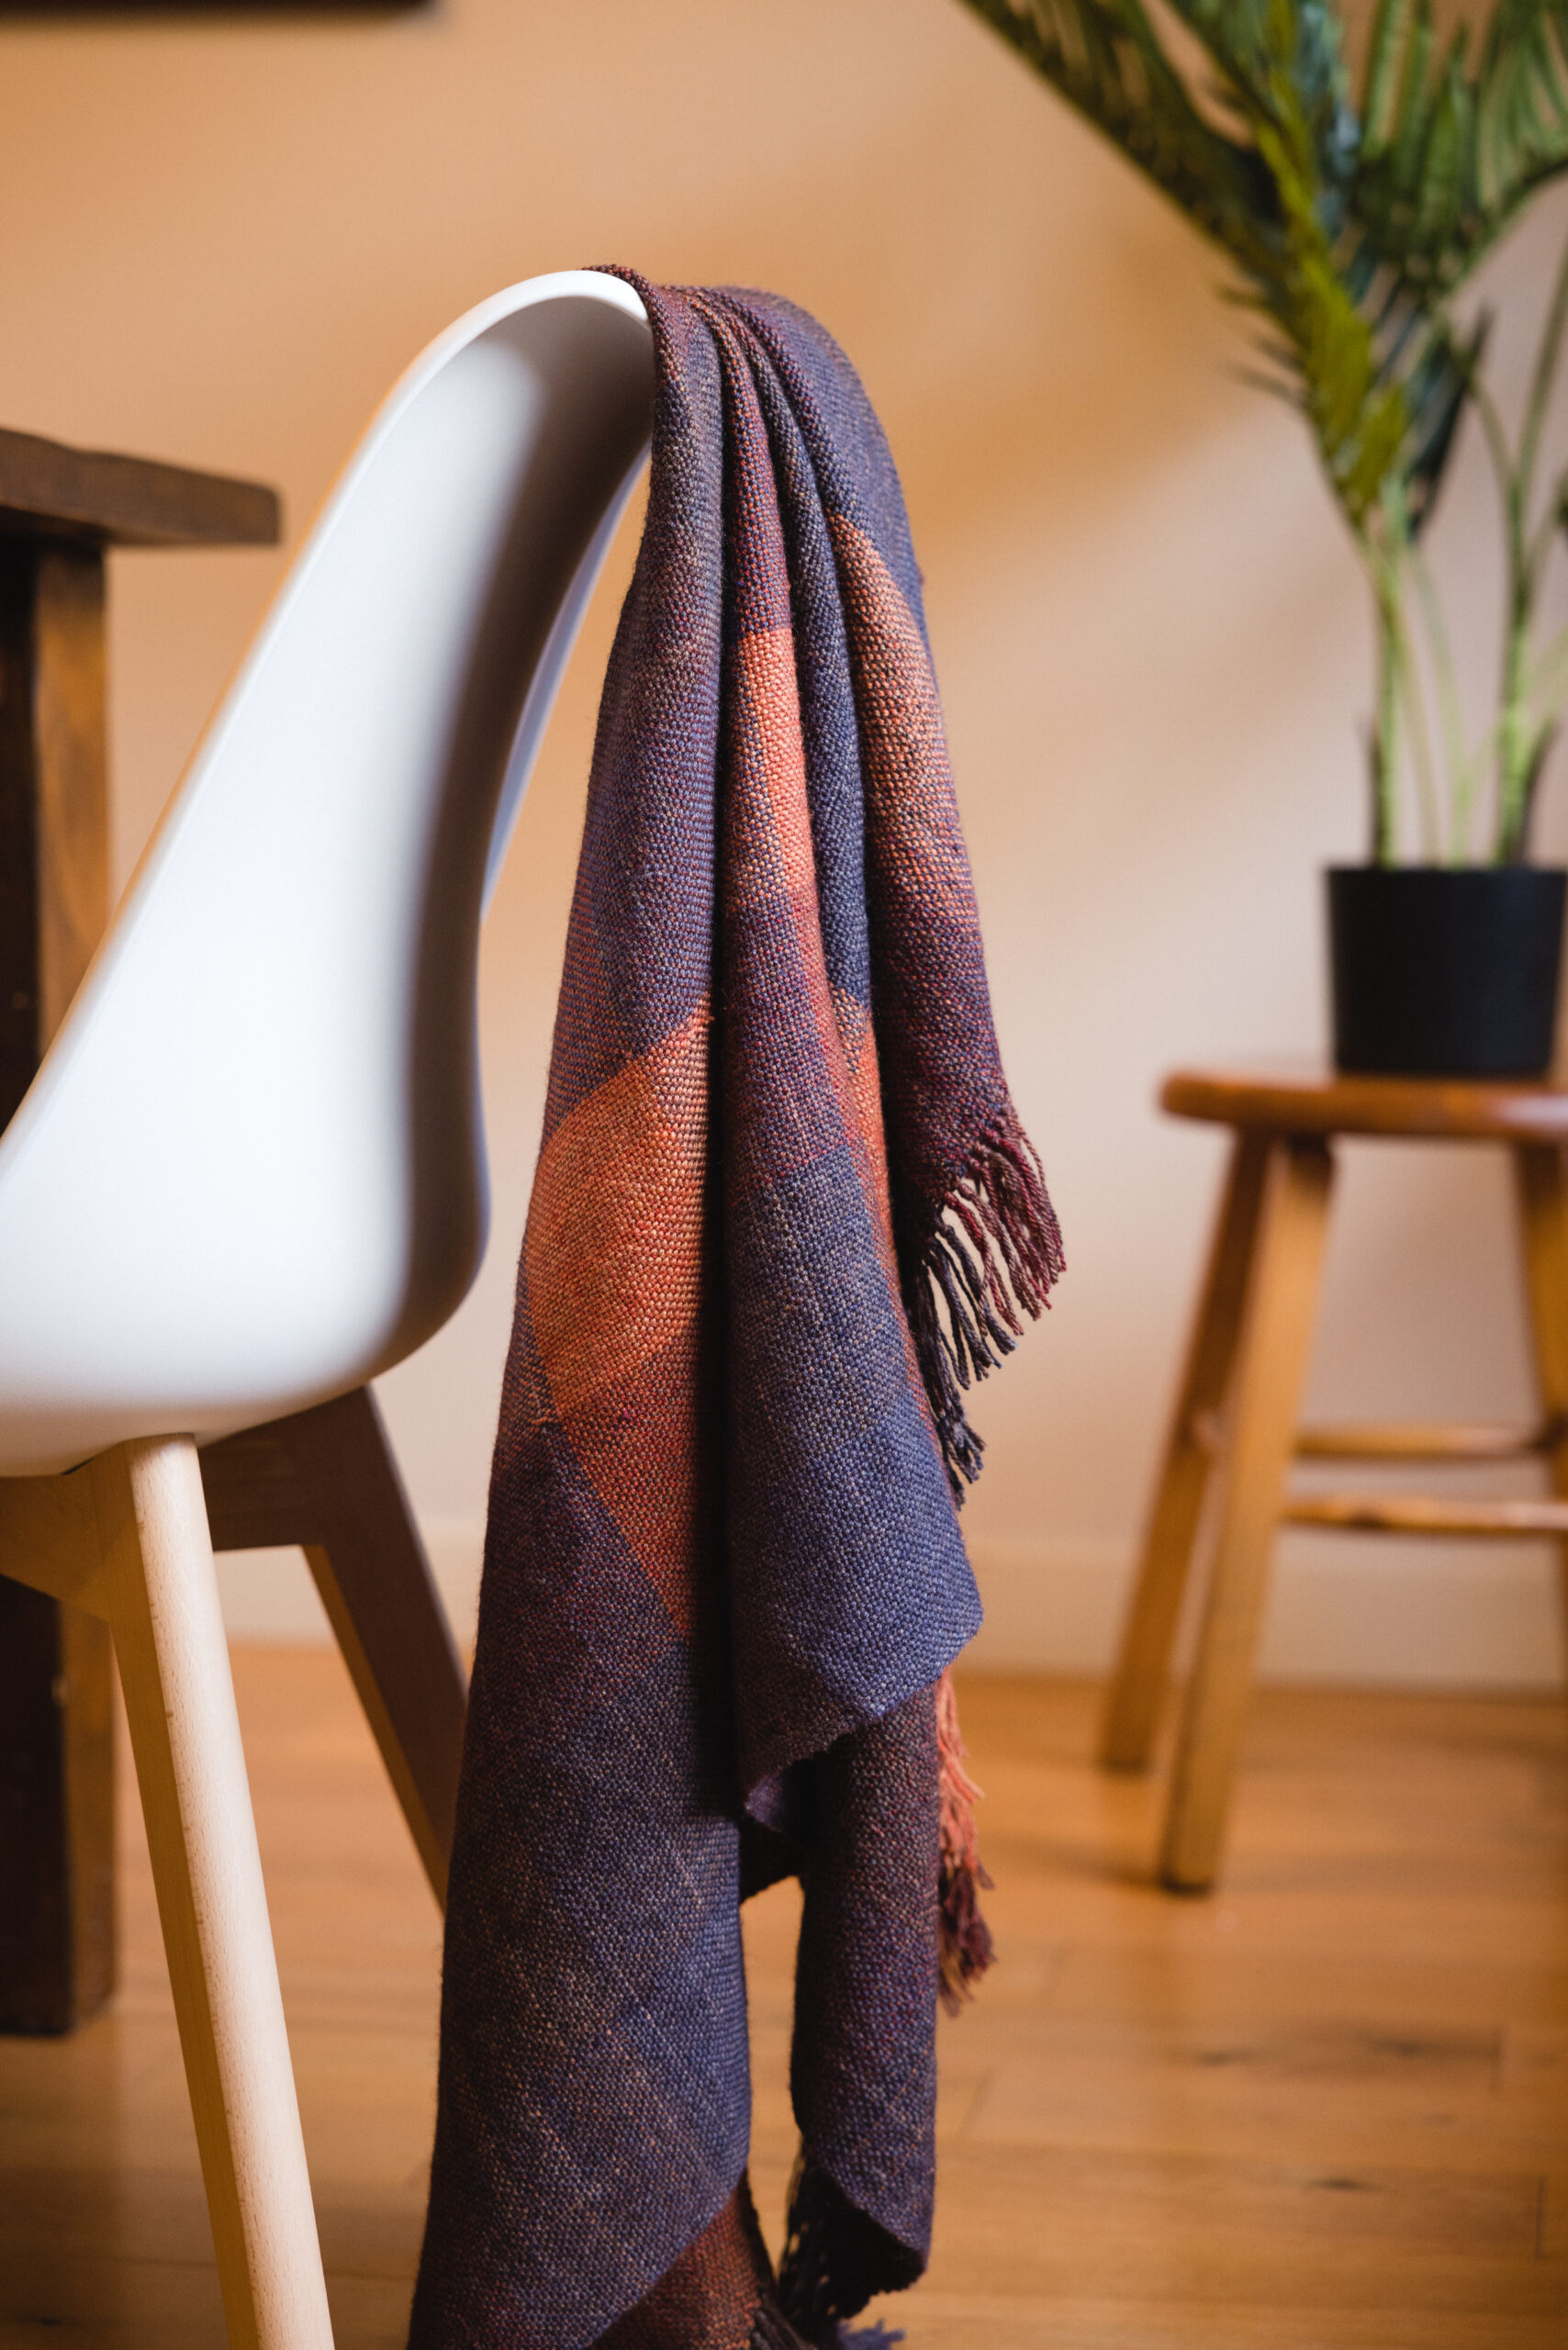 Double Weave Blanket in Cabin colourway